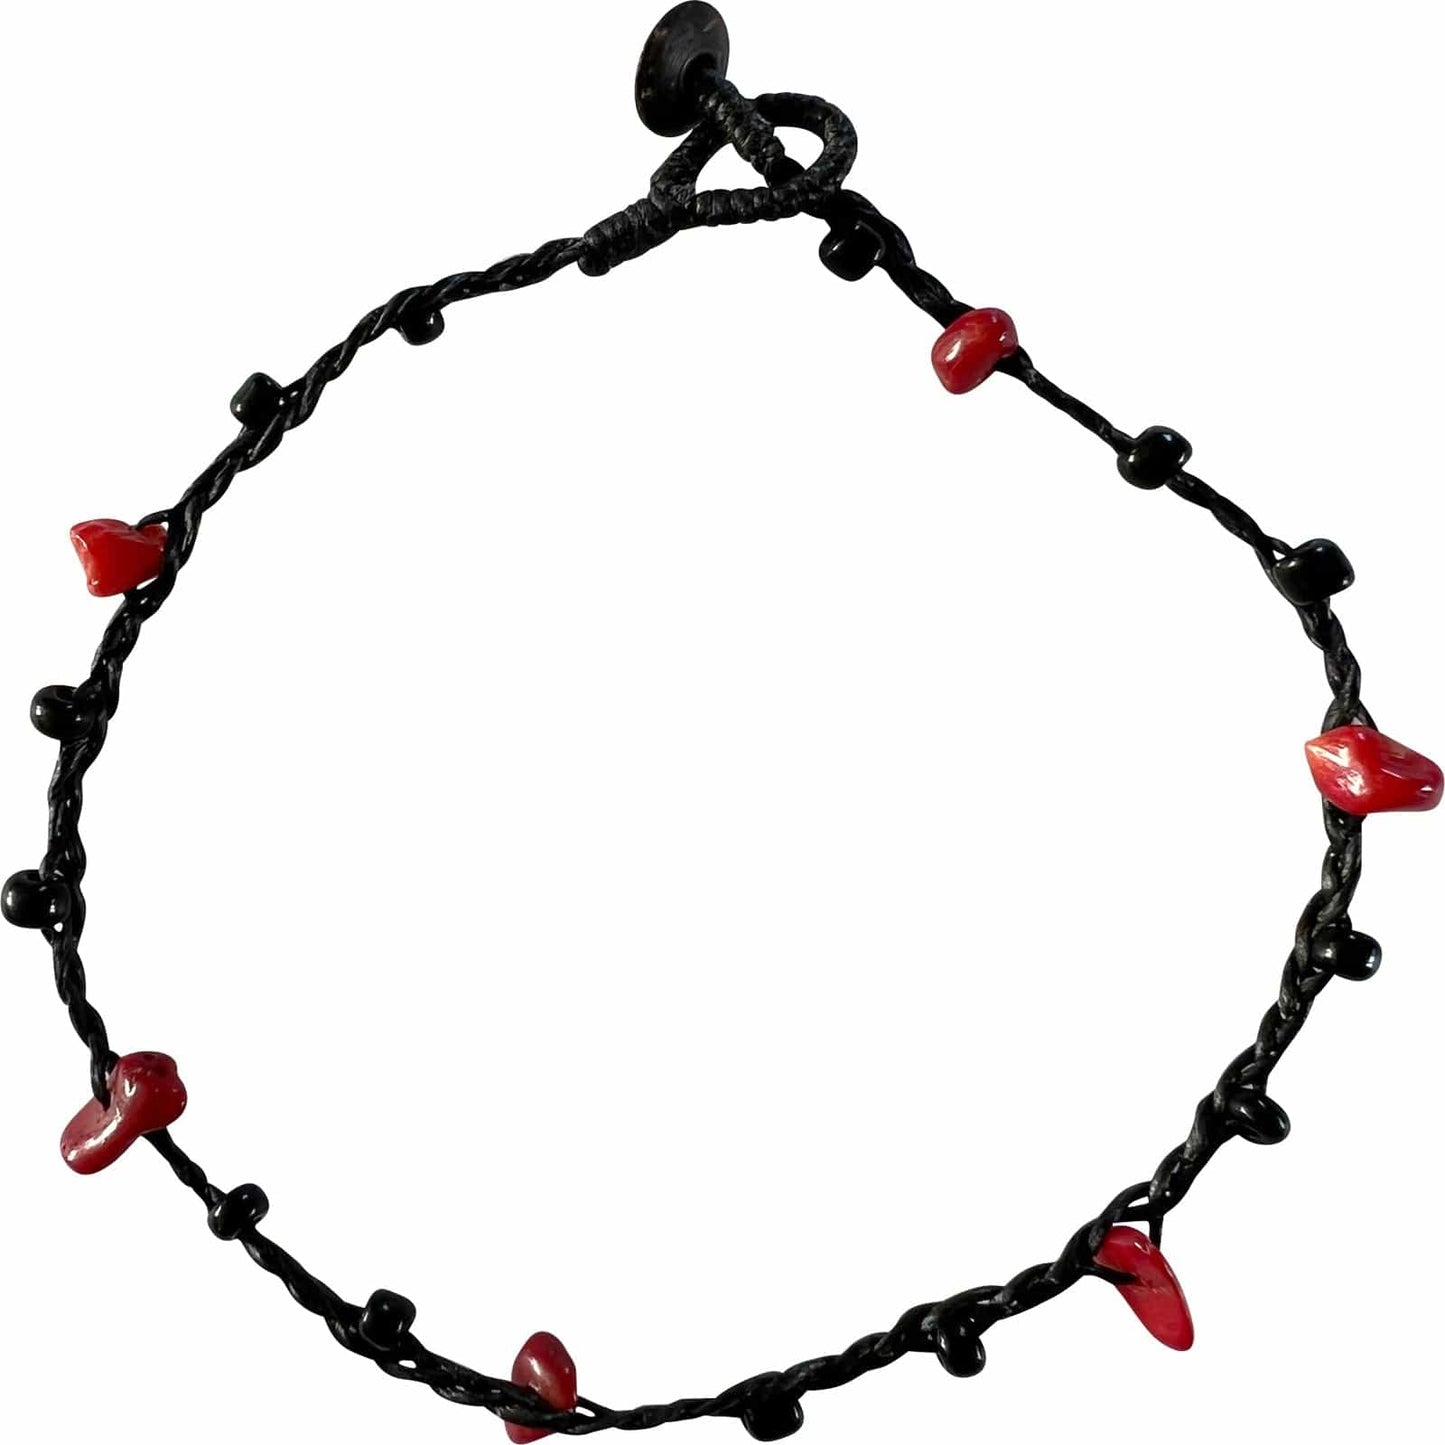 Black Red Beads Anklet Foot Chain Ankle Bracelet Girls Womens Handmade Jewellery